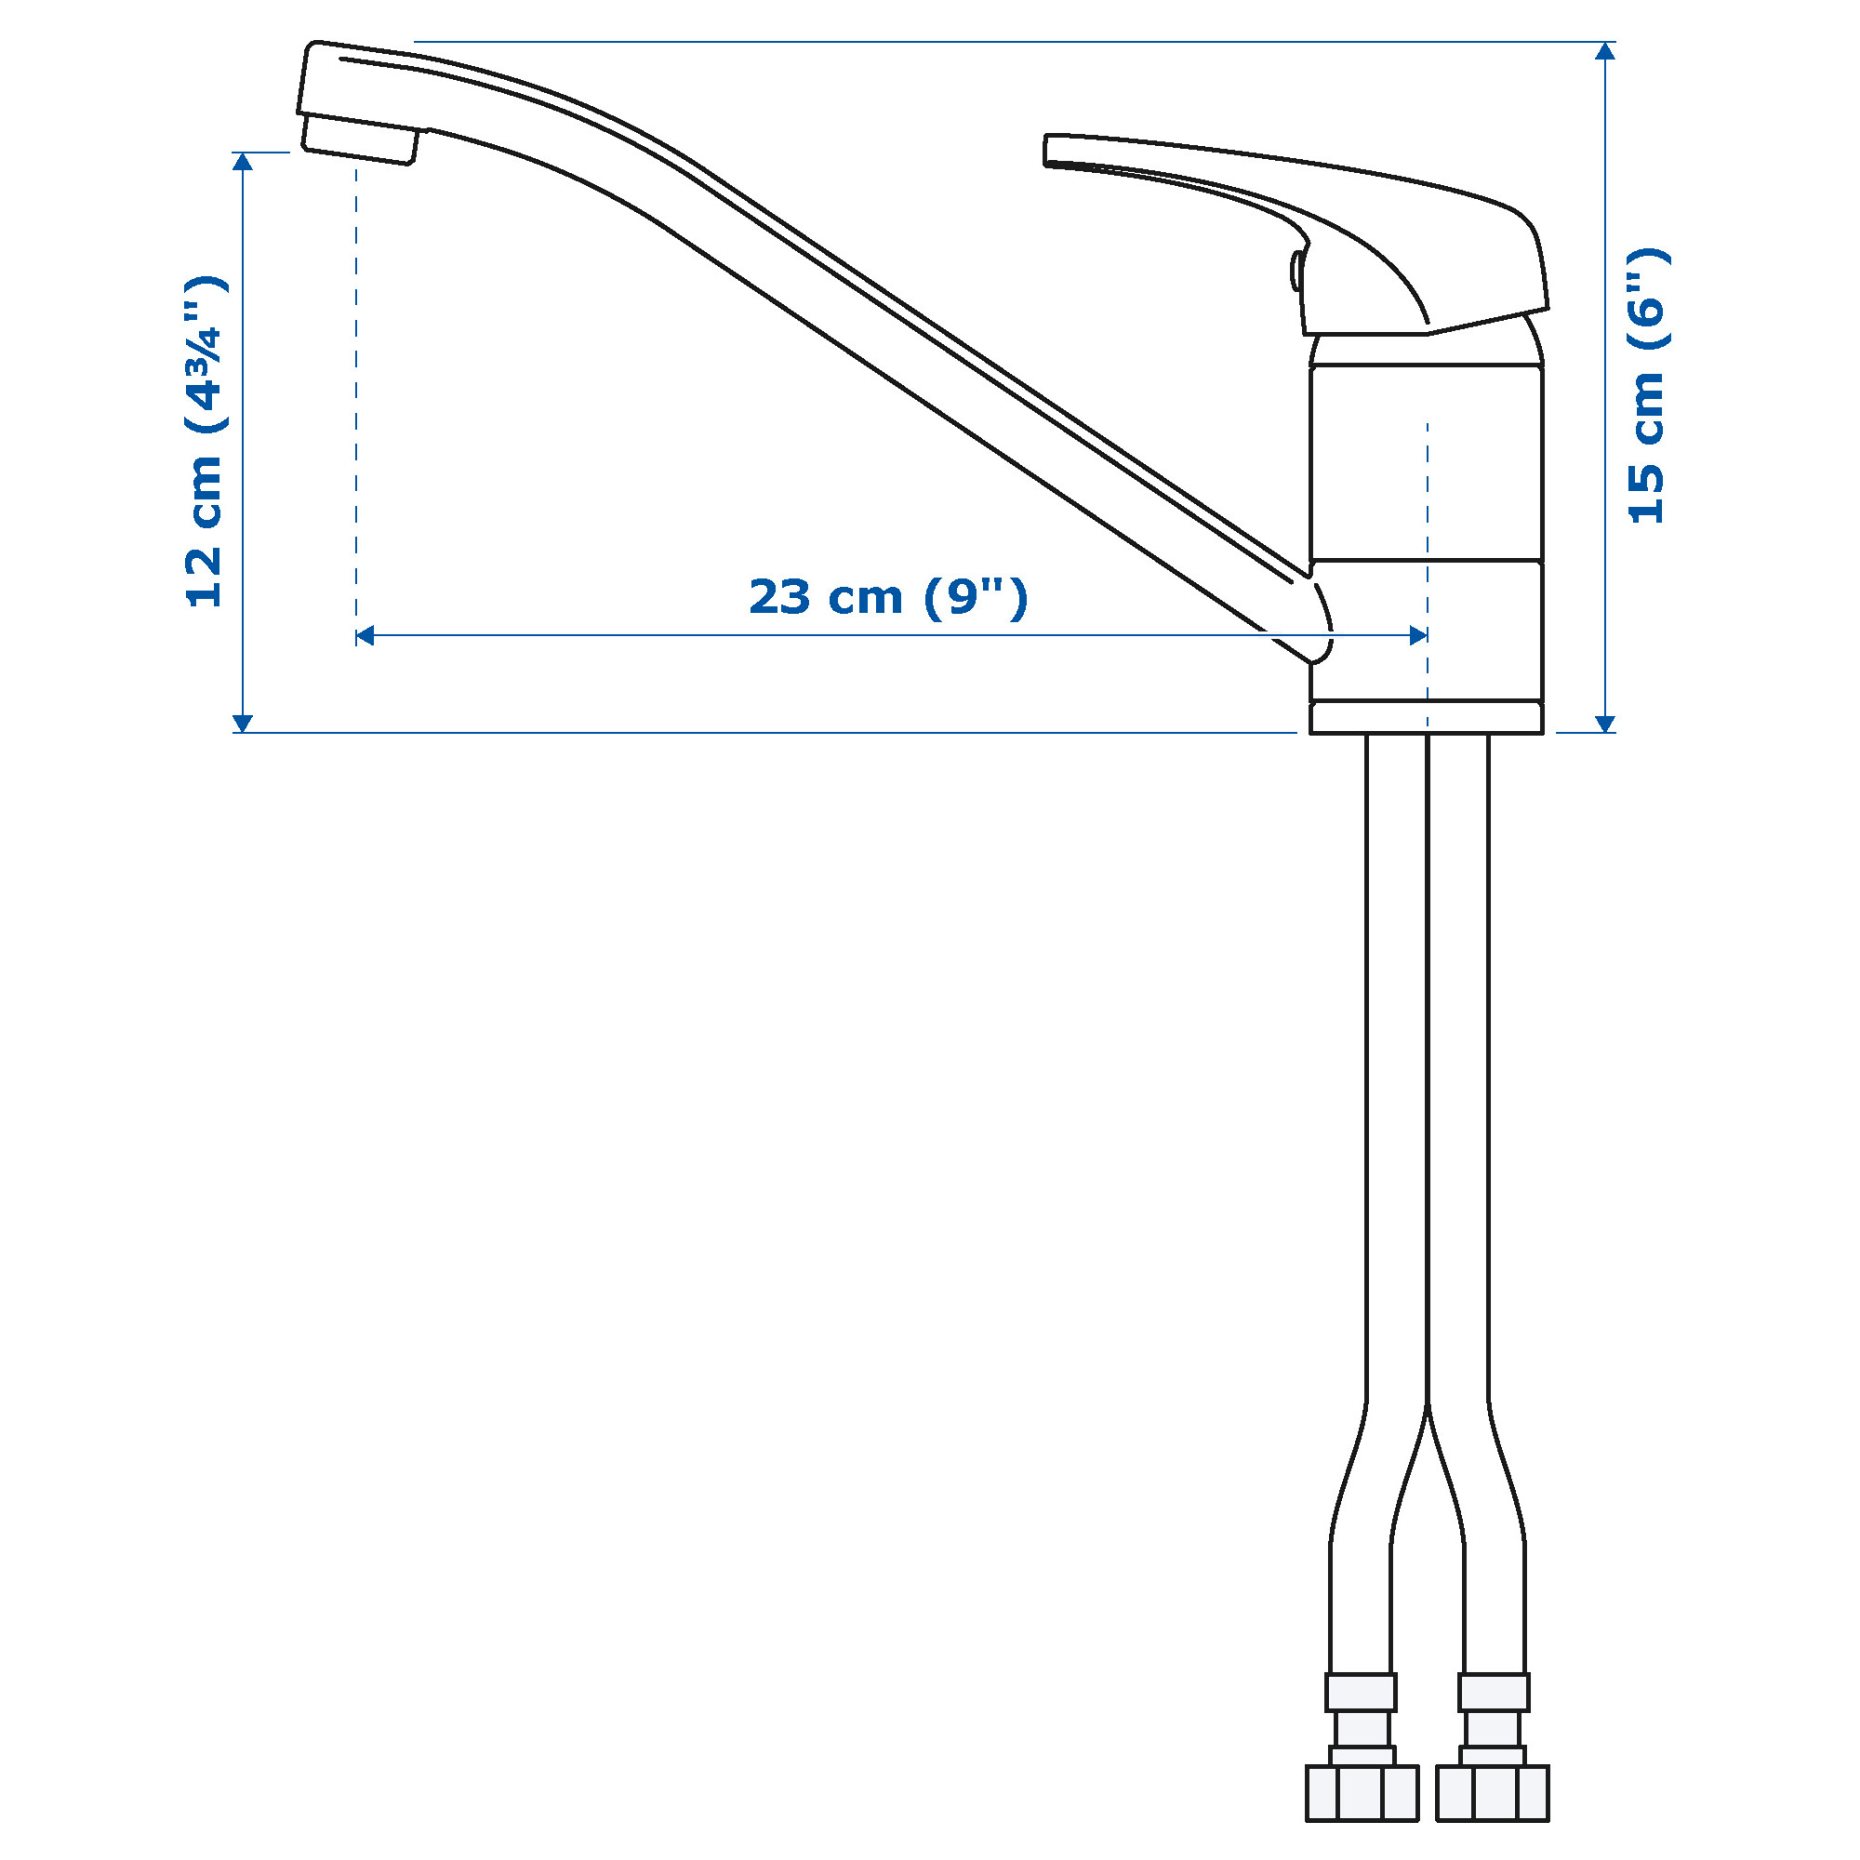 SUNDSVIK, single-lever kitchen mixer tap, 800.318.61